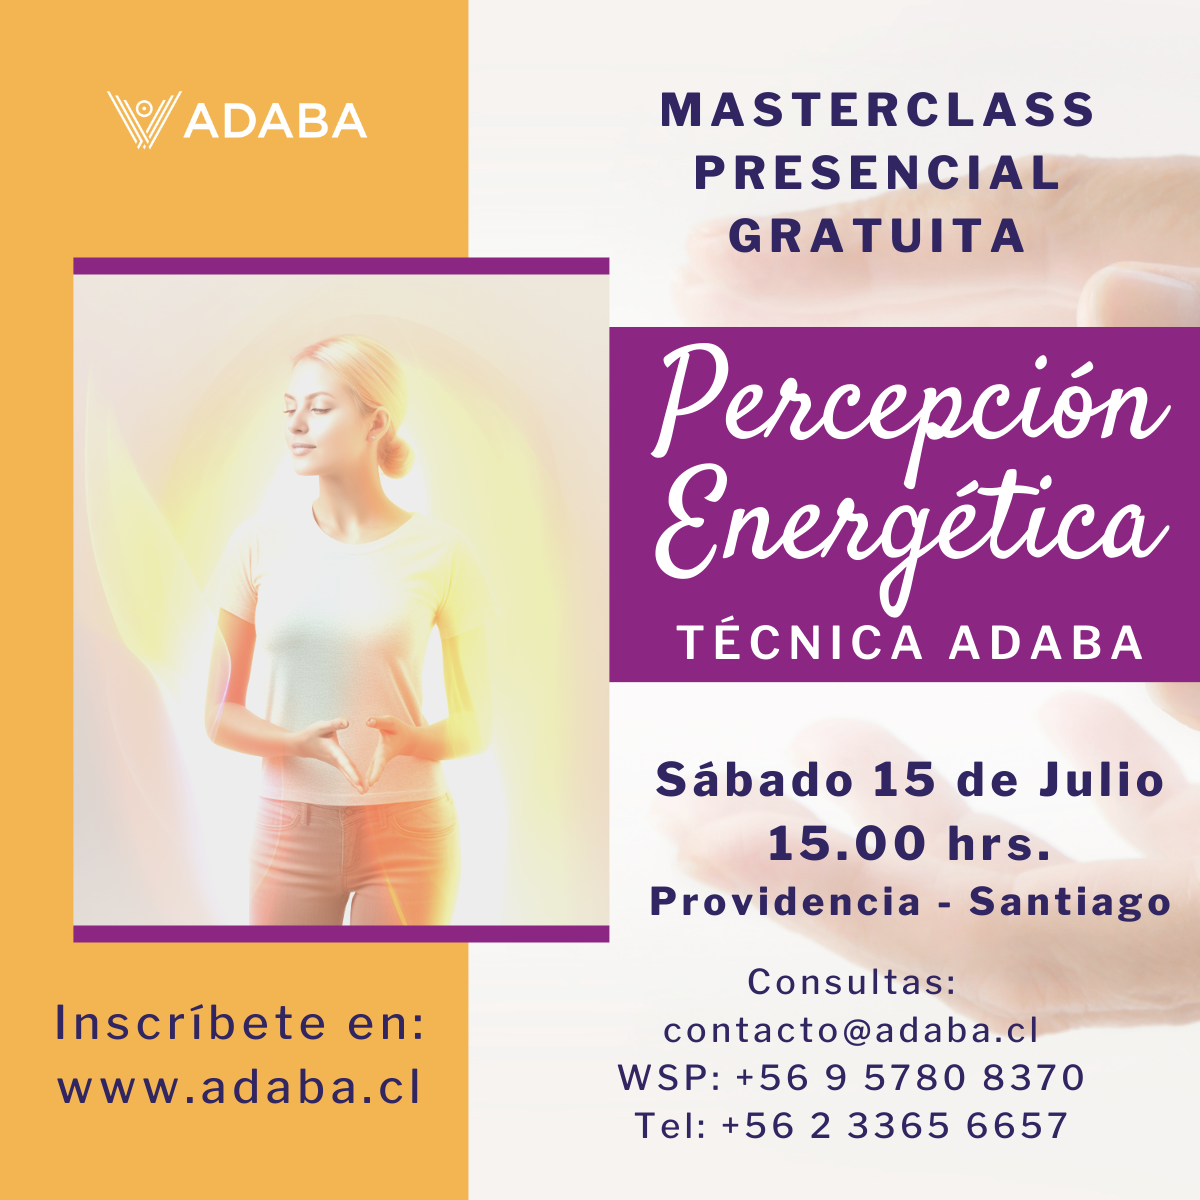 Masterclass Presencial Gratuita - Percepción Energética Técnica ADABA ✨- 15 Julio